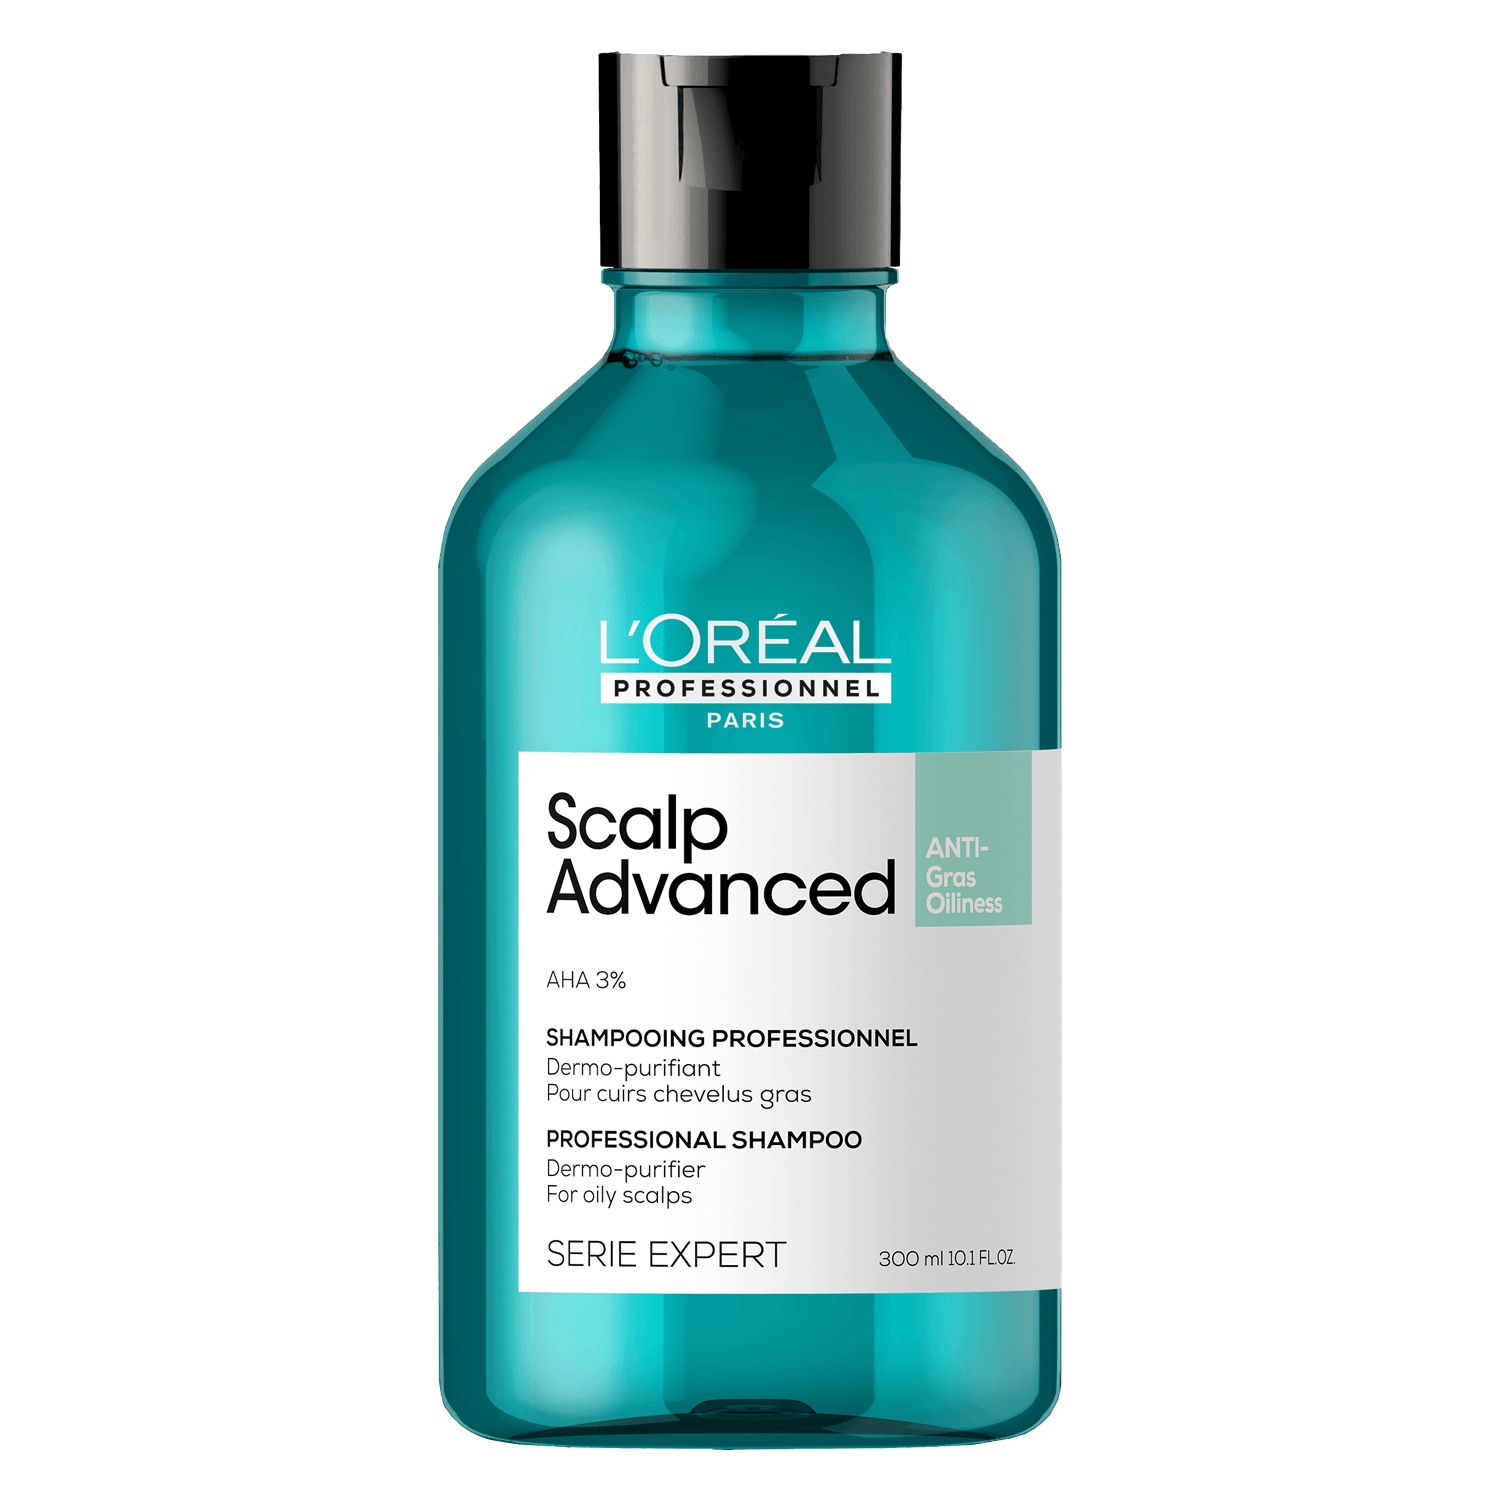 Produktbild von Série Expert Scalp Advanced - Anti-Oiliness Dermo-Purifier Shampoo